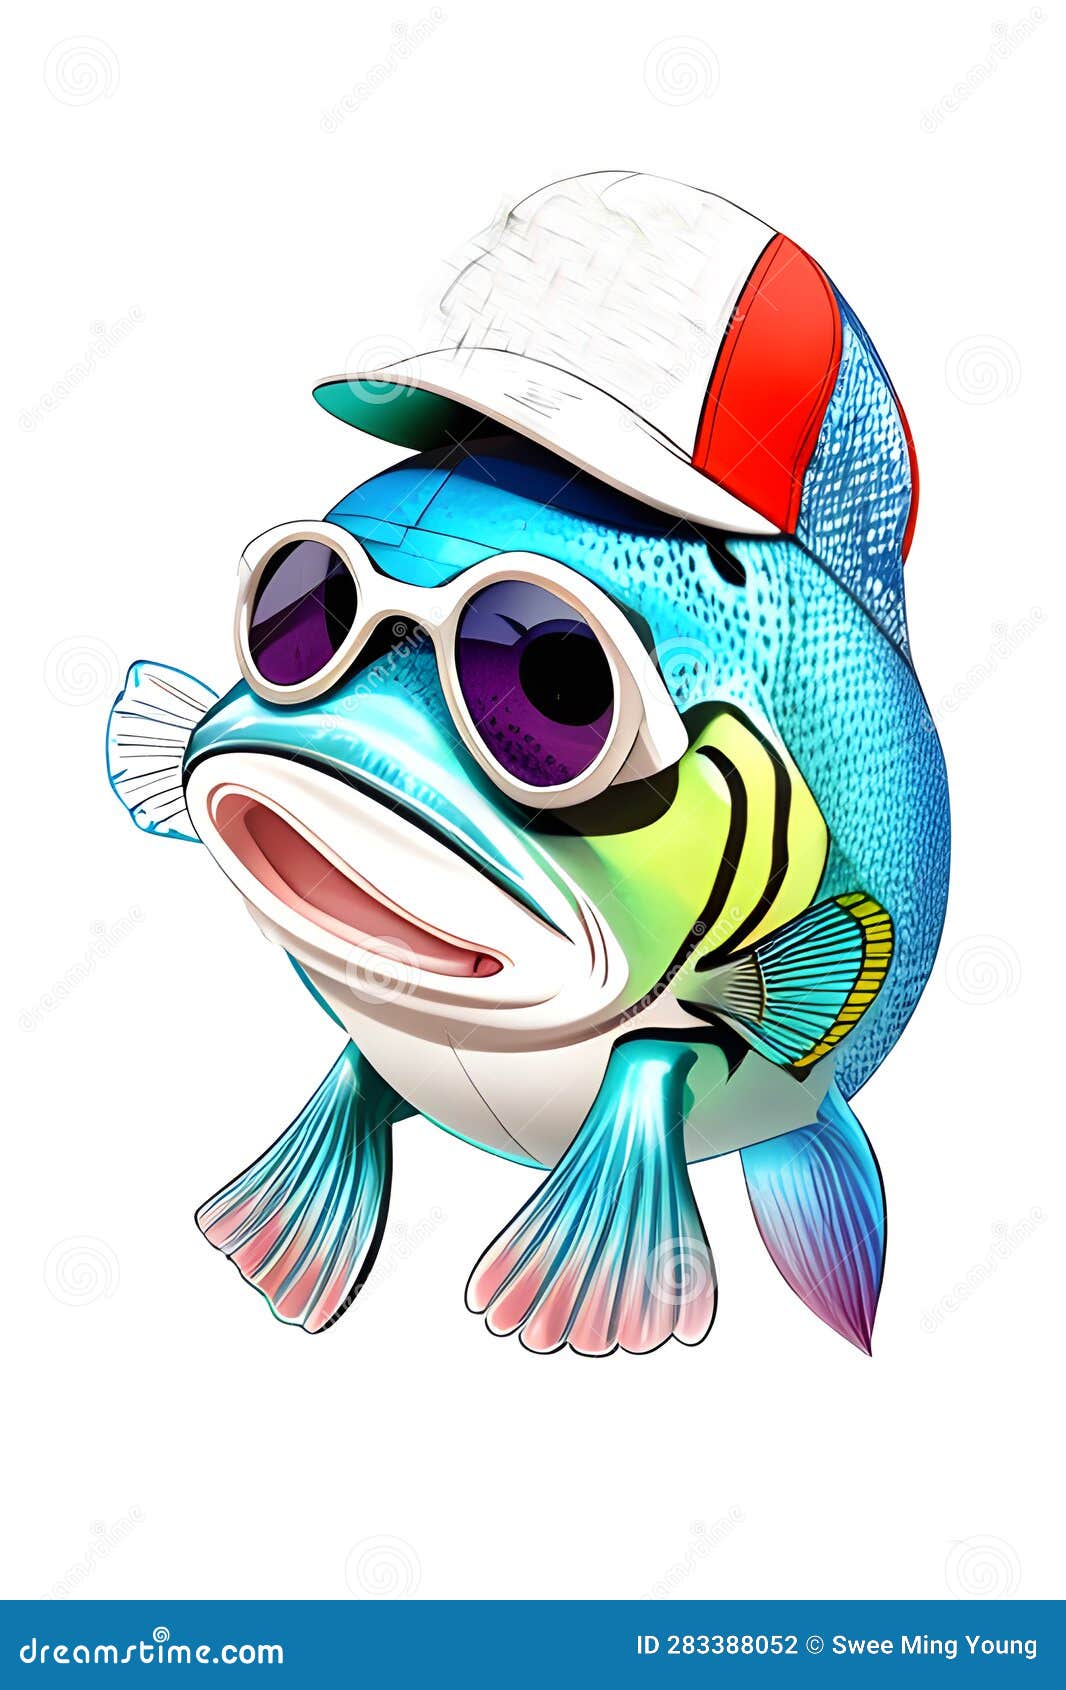 Image of a Colorful Cartoon Bass Fish Wearing Sunglass, Wearing